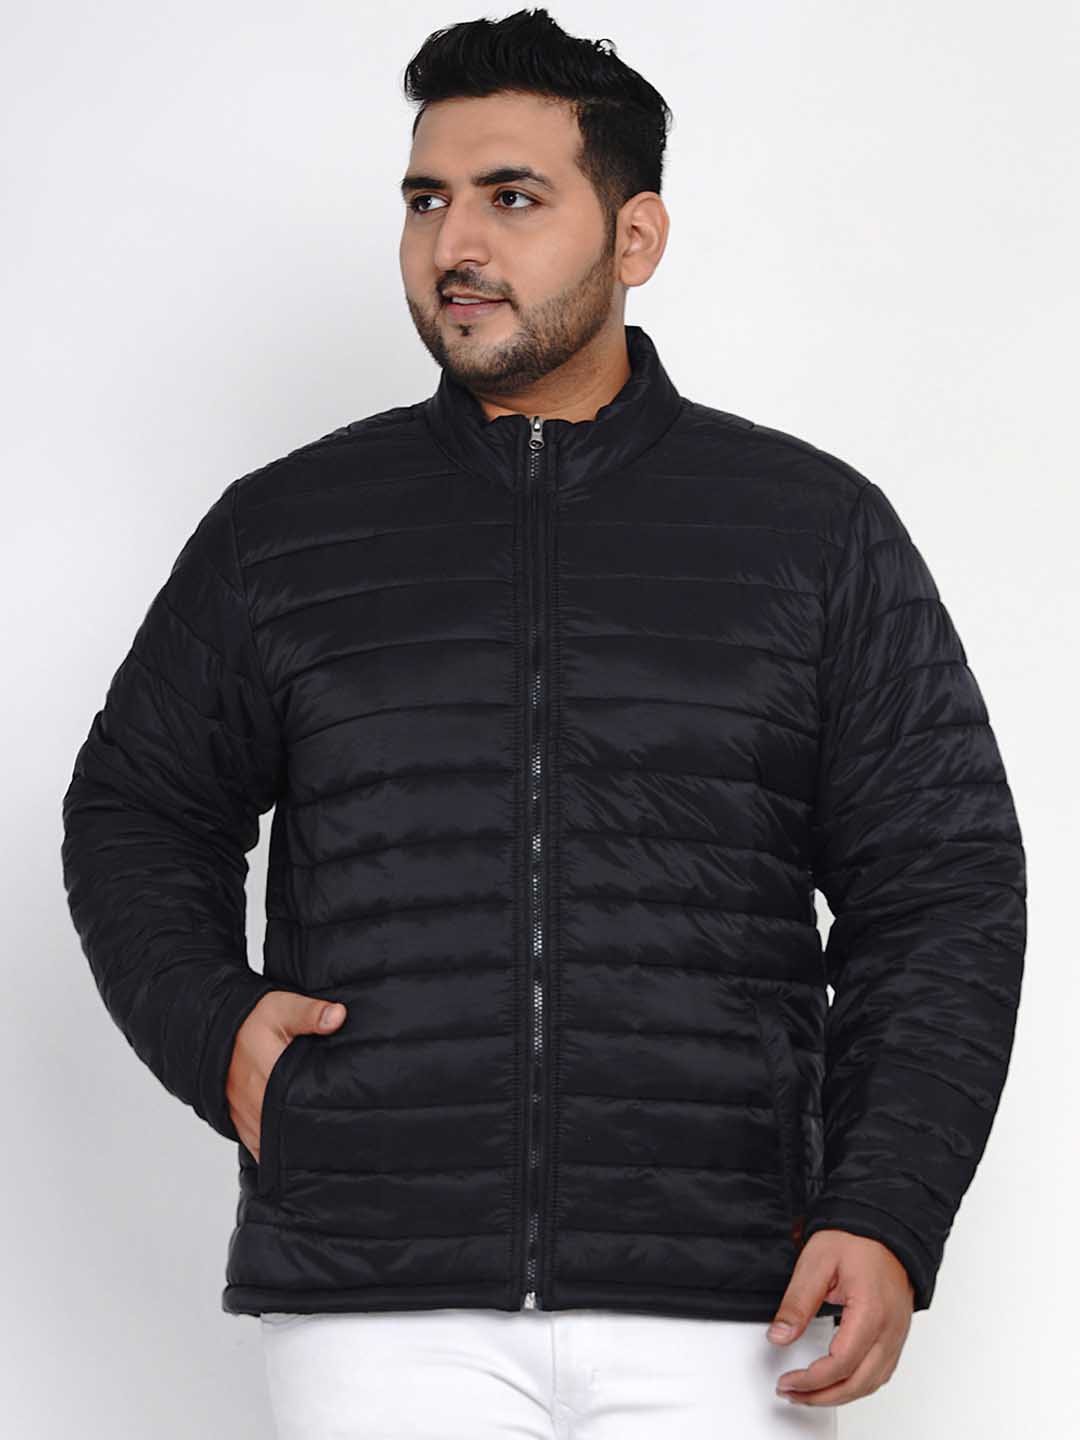 winterwear/jackets/JPJKT7385C/jpjkt7385c-3.jpg